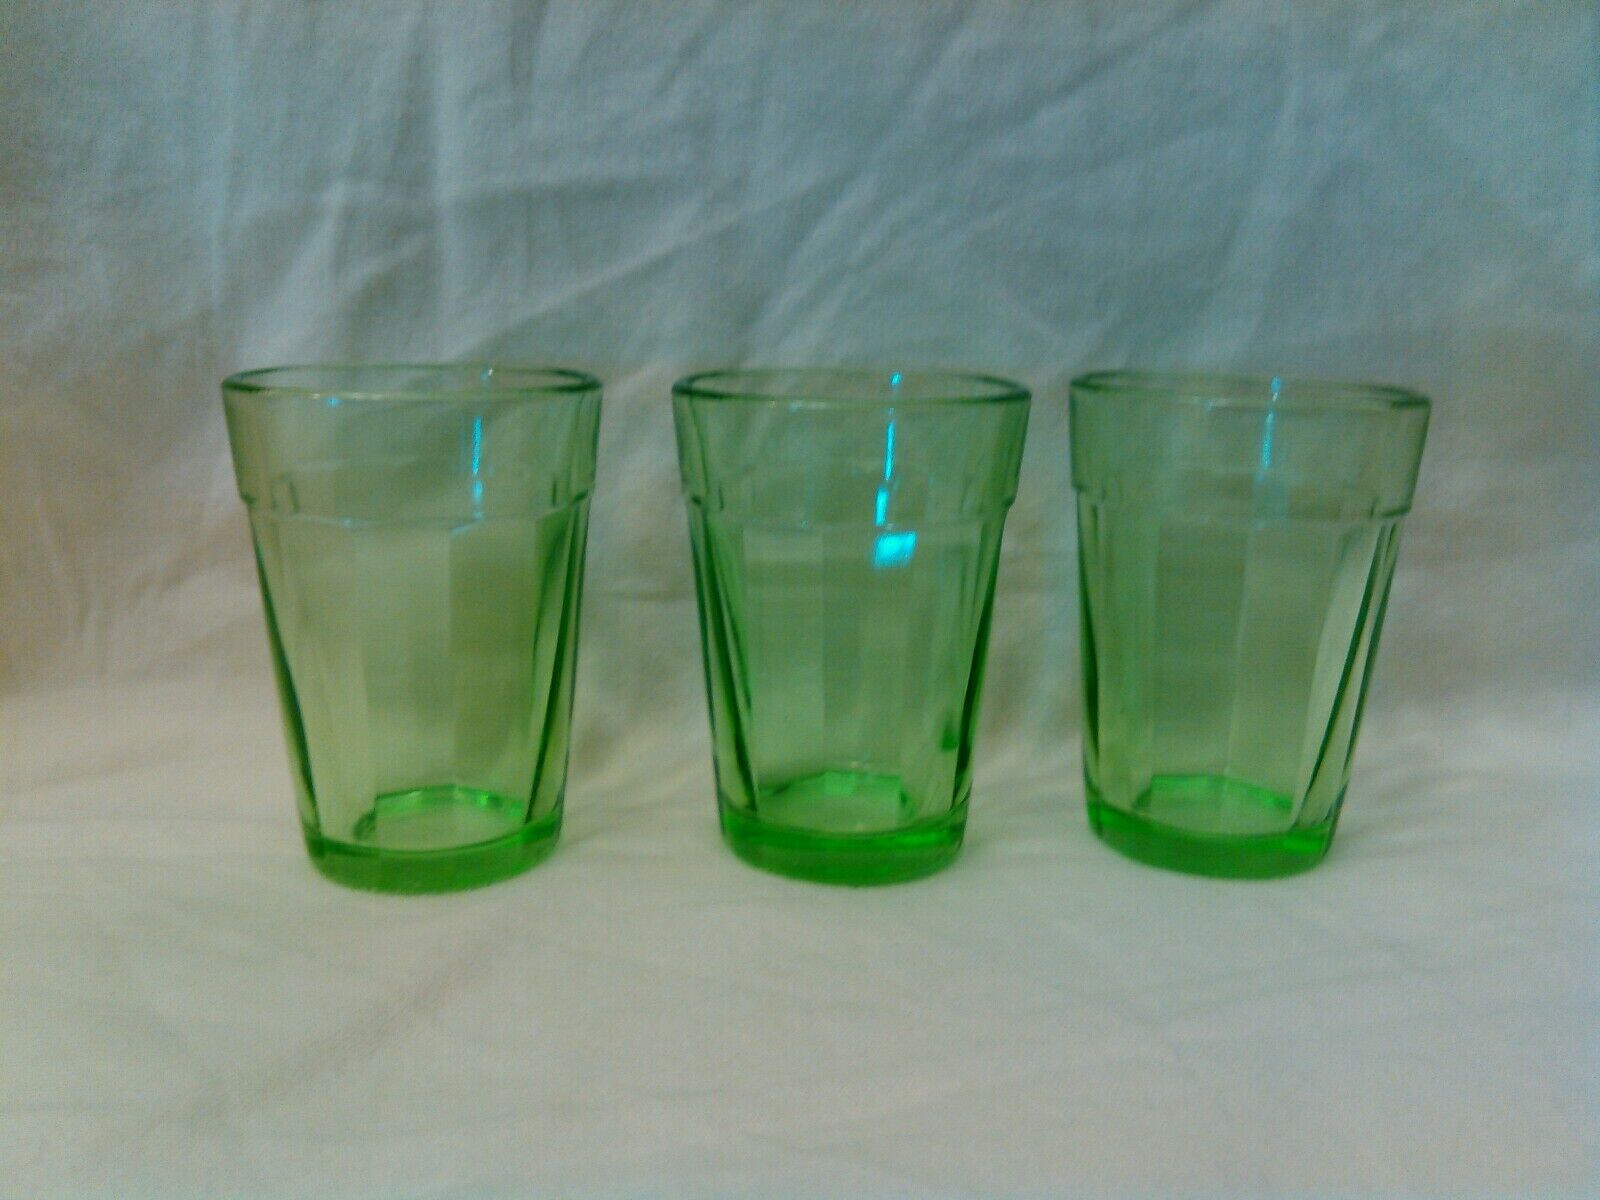  3 Vintage Green Depression Glass Shot Glasses Small Tumblers Vaseline Antique 